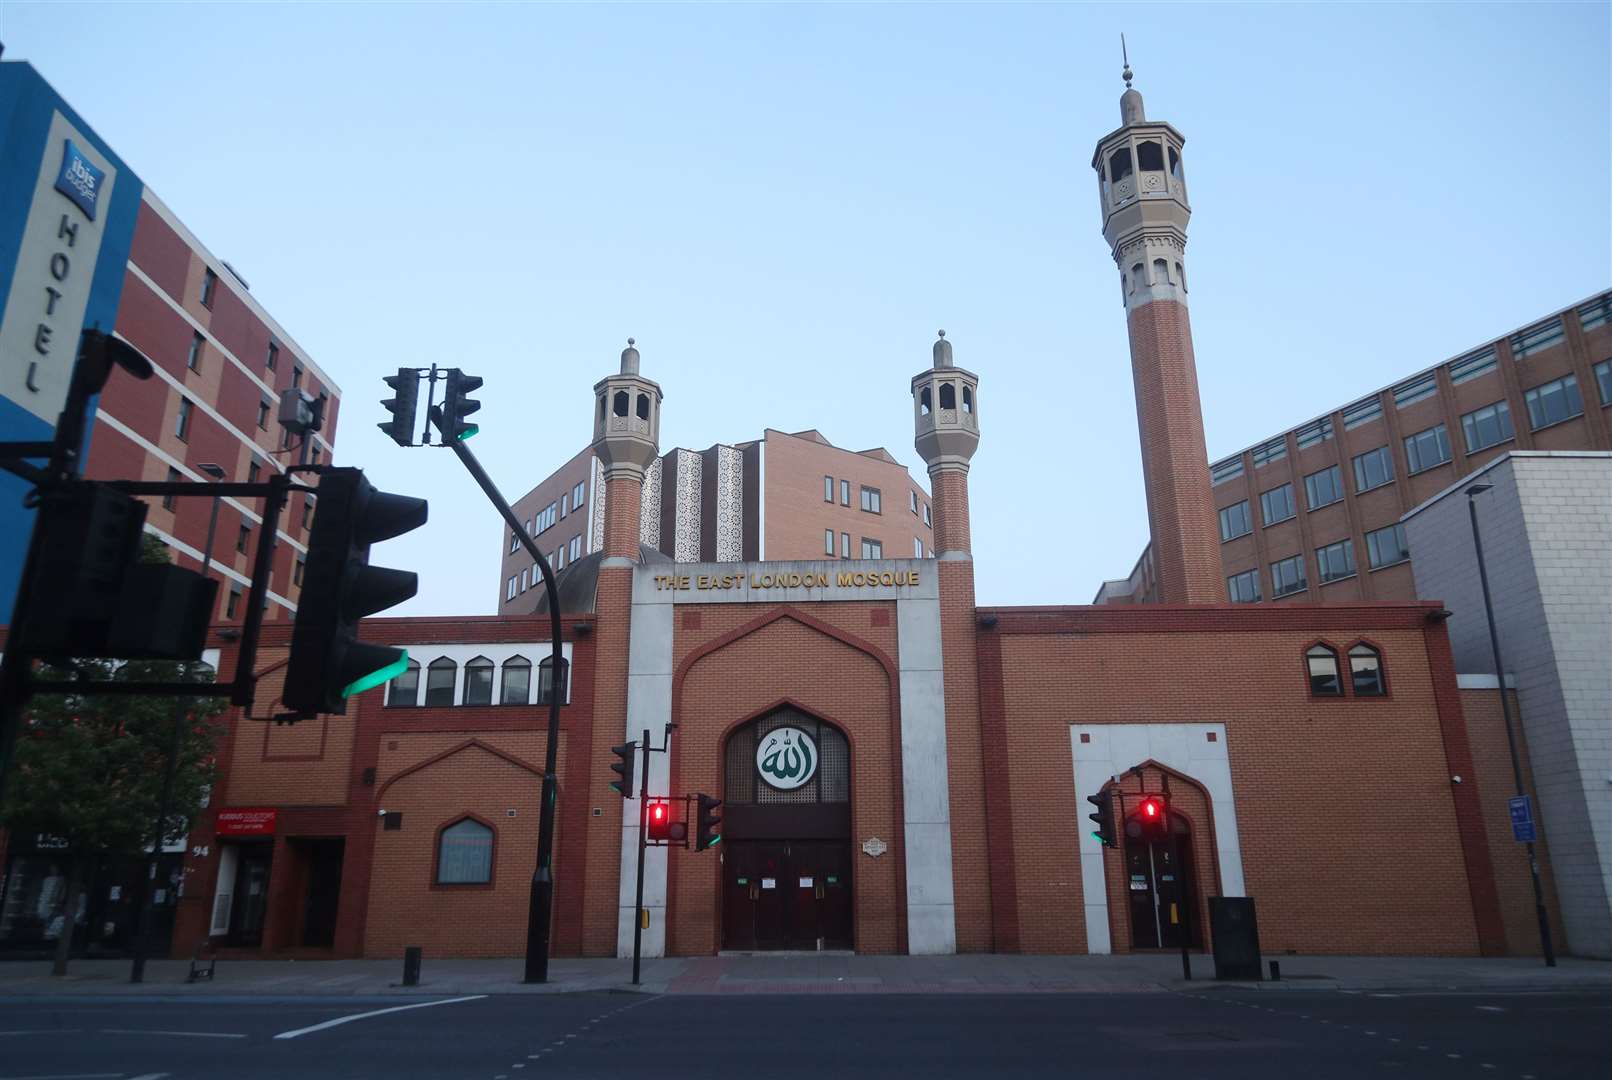 The East London Mosque in Whitechapel (Yui Mok/PA)